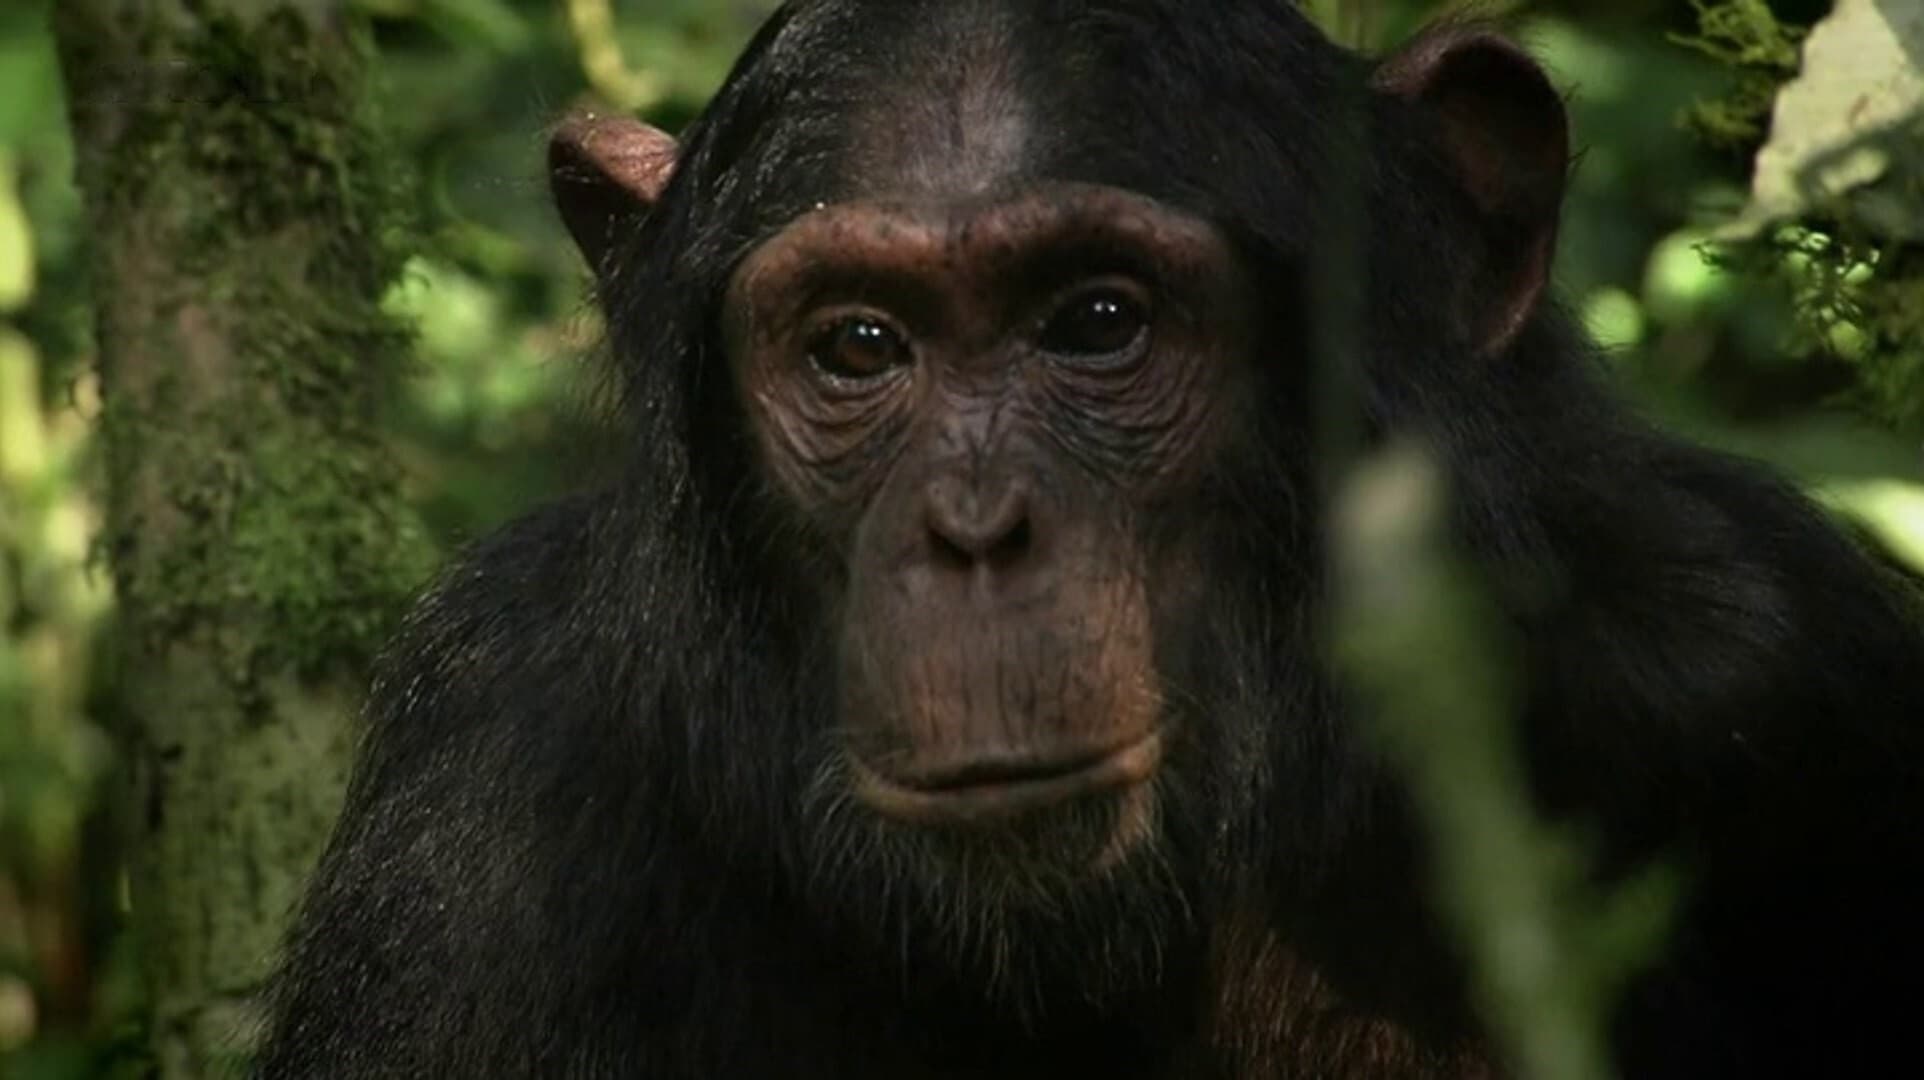 Das Geheimnis der Affen - Kulturforschung bei Schimpansen (2014)